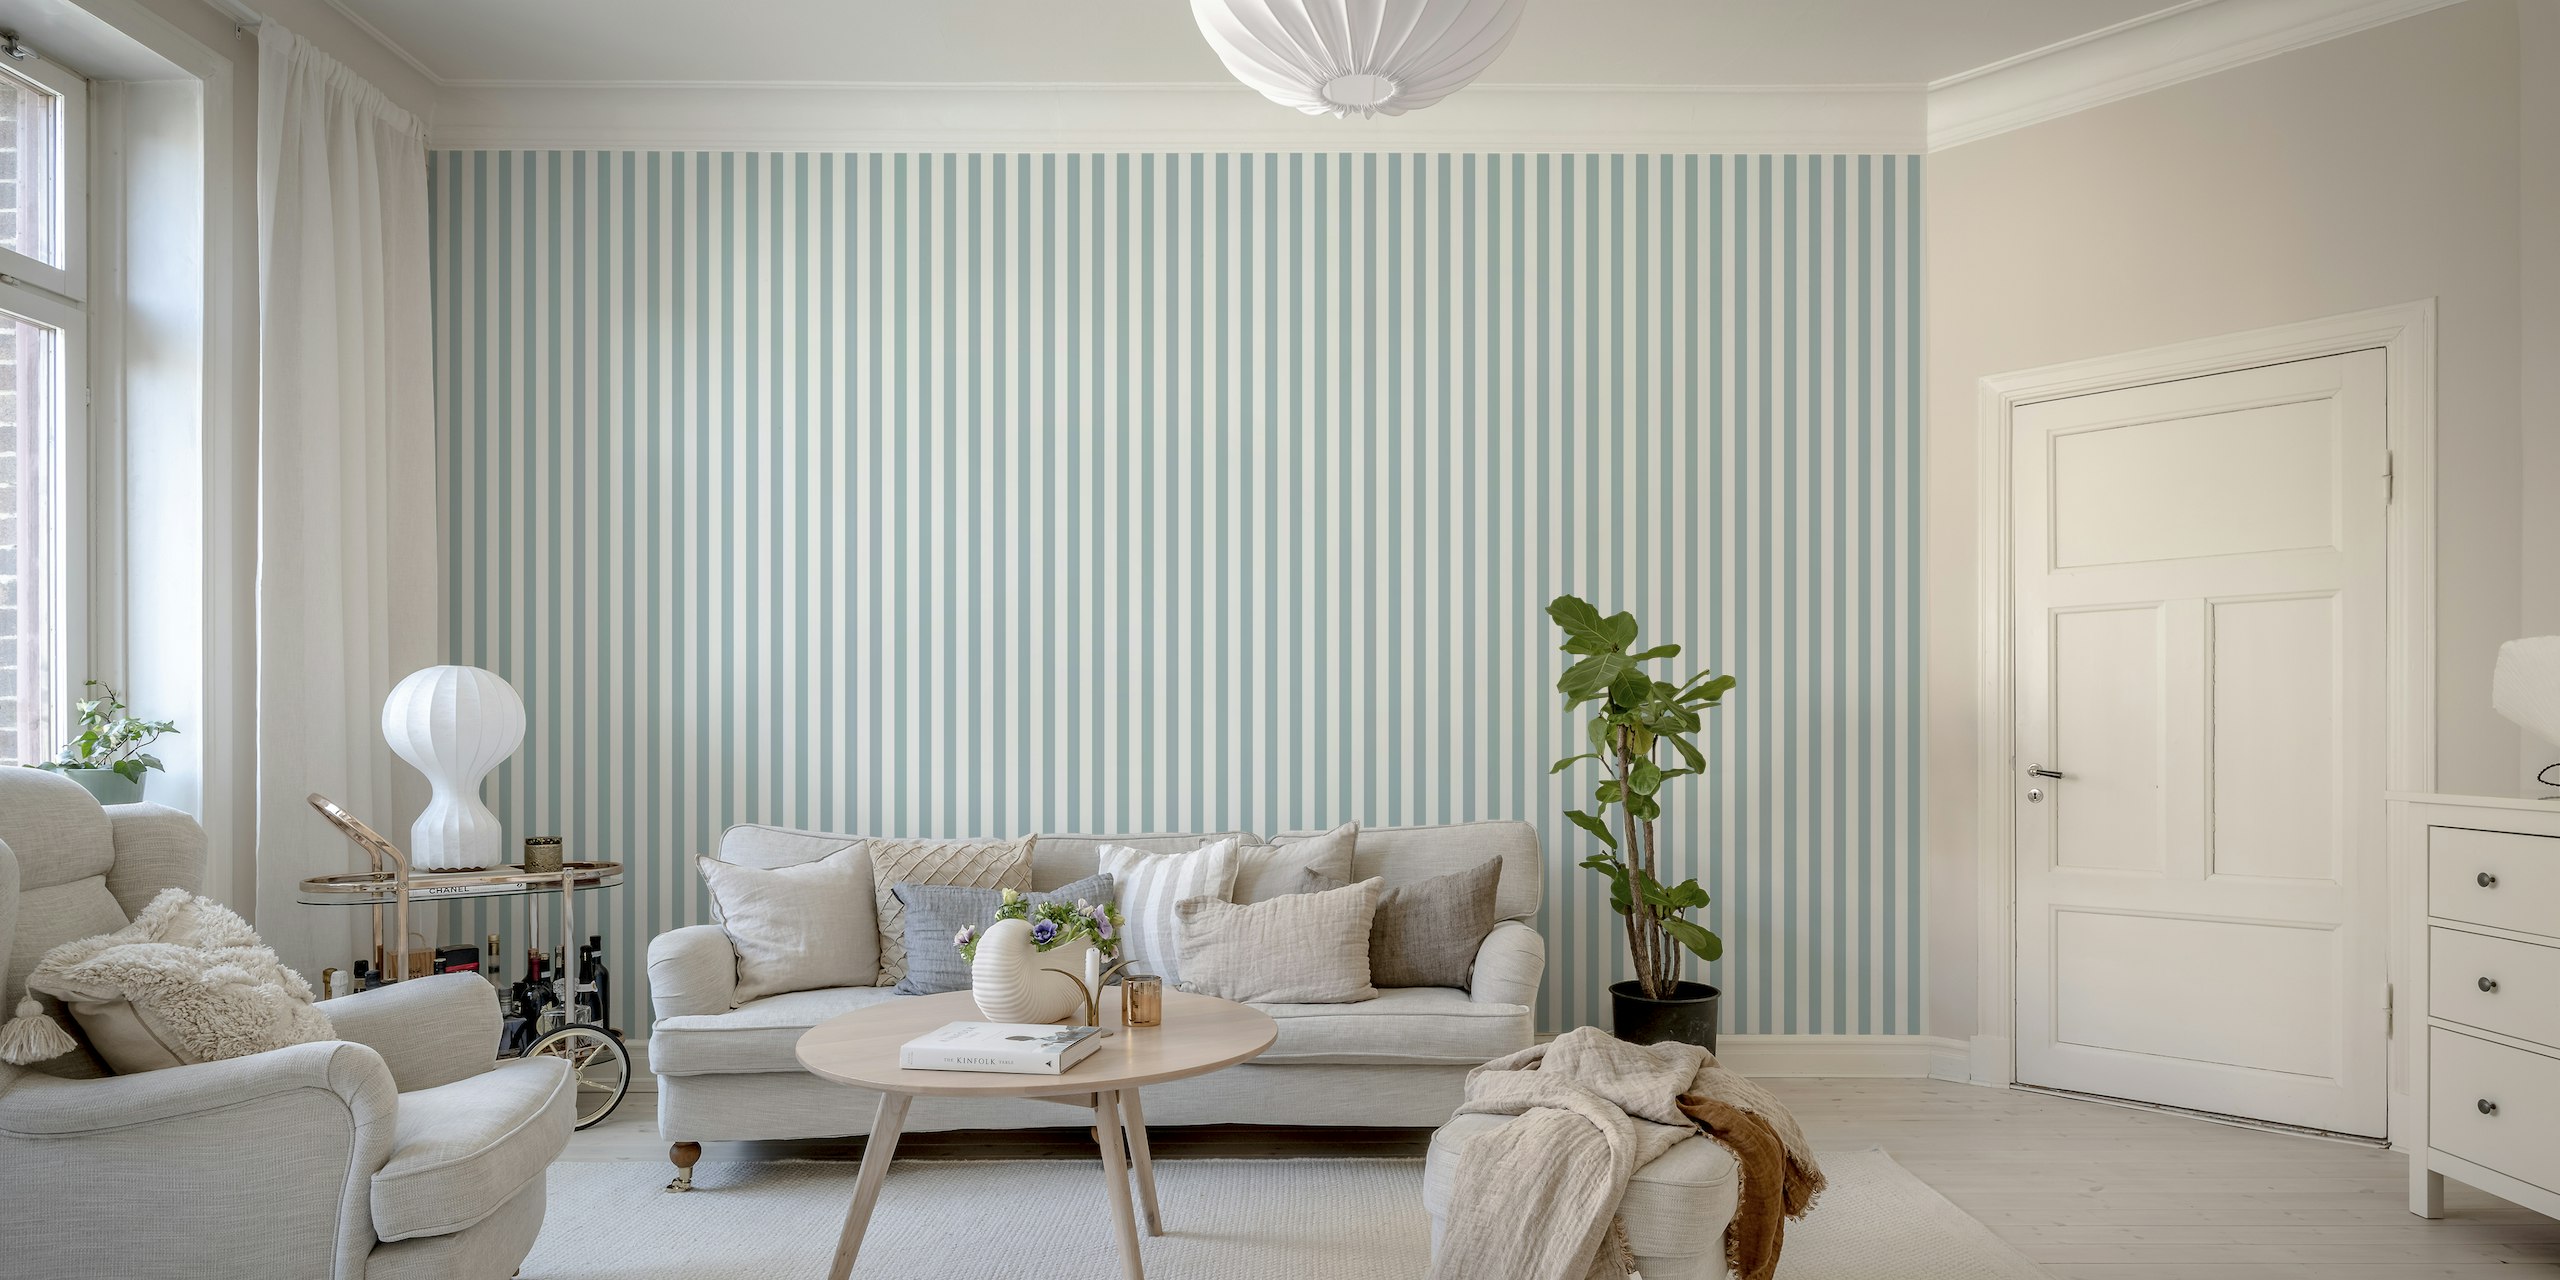 Scandi Stripes - Blue wall mural with serene blue vertical stripes for modern home decor